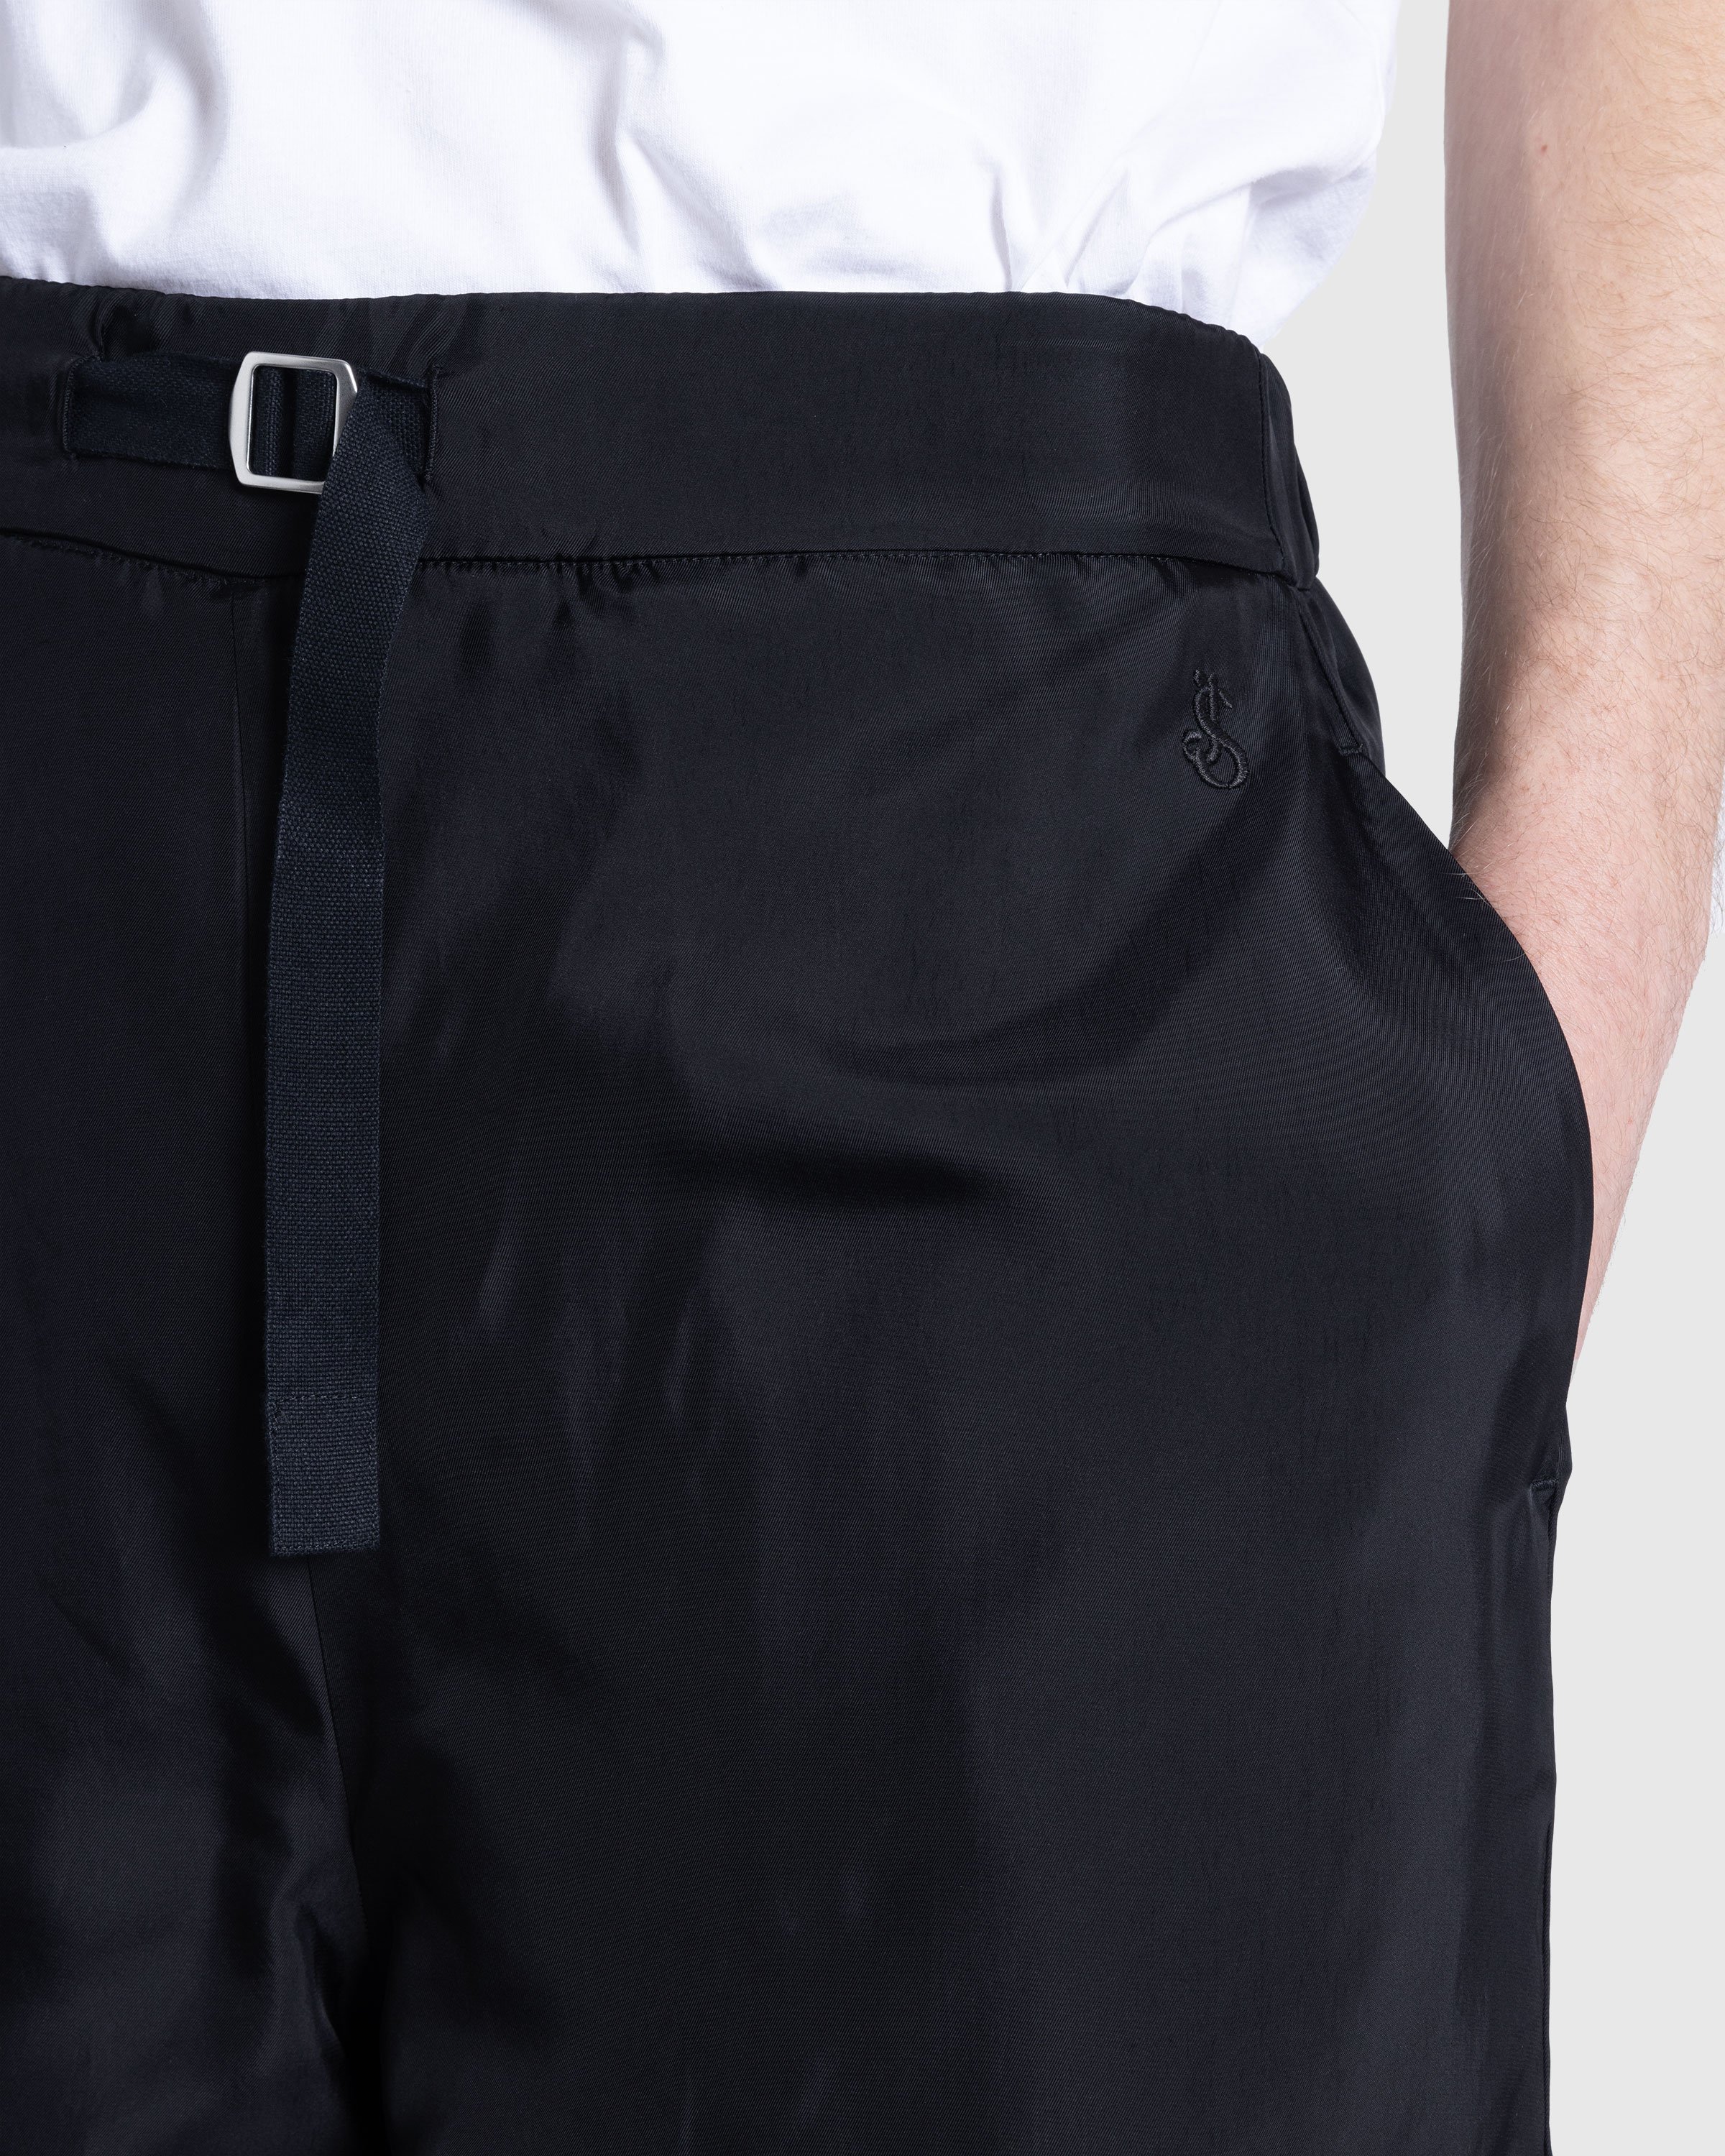 Jil Sander - Shorts - Clothing - Black - Image 5